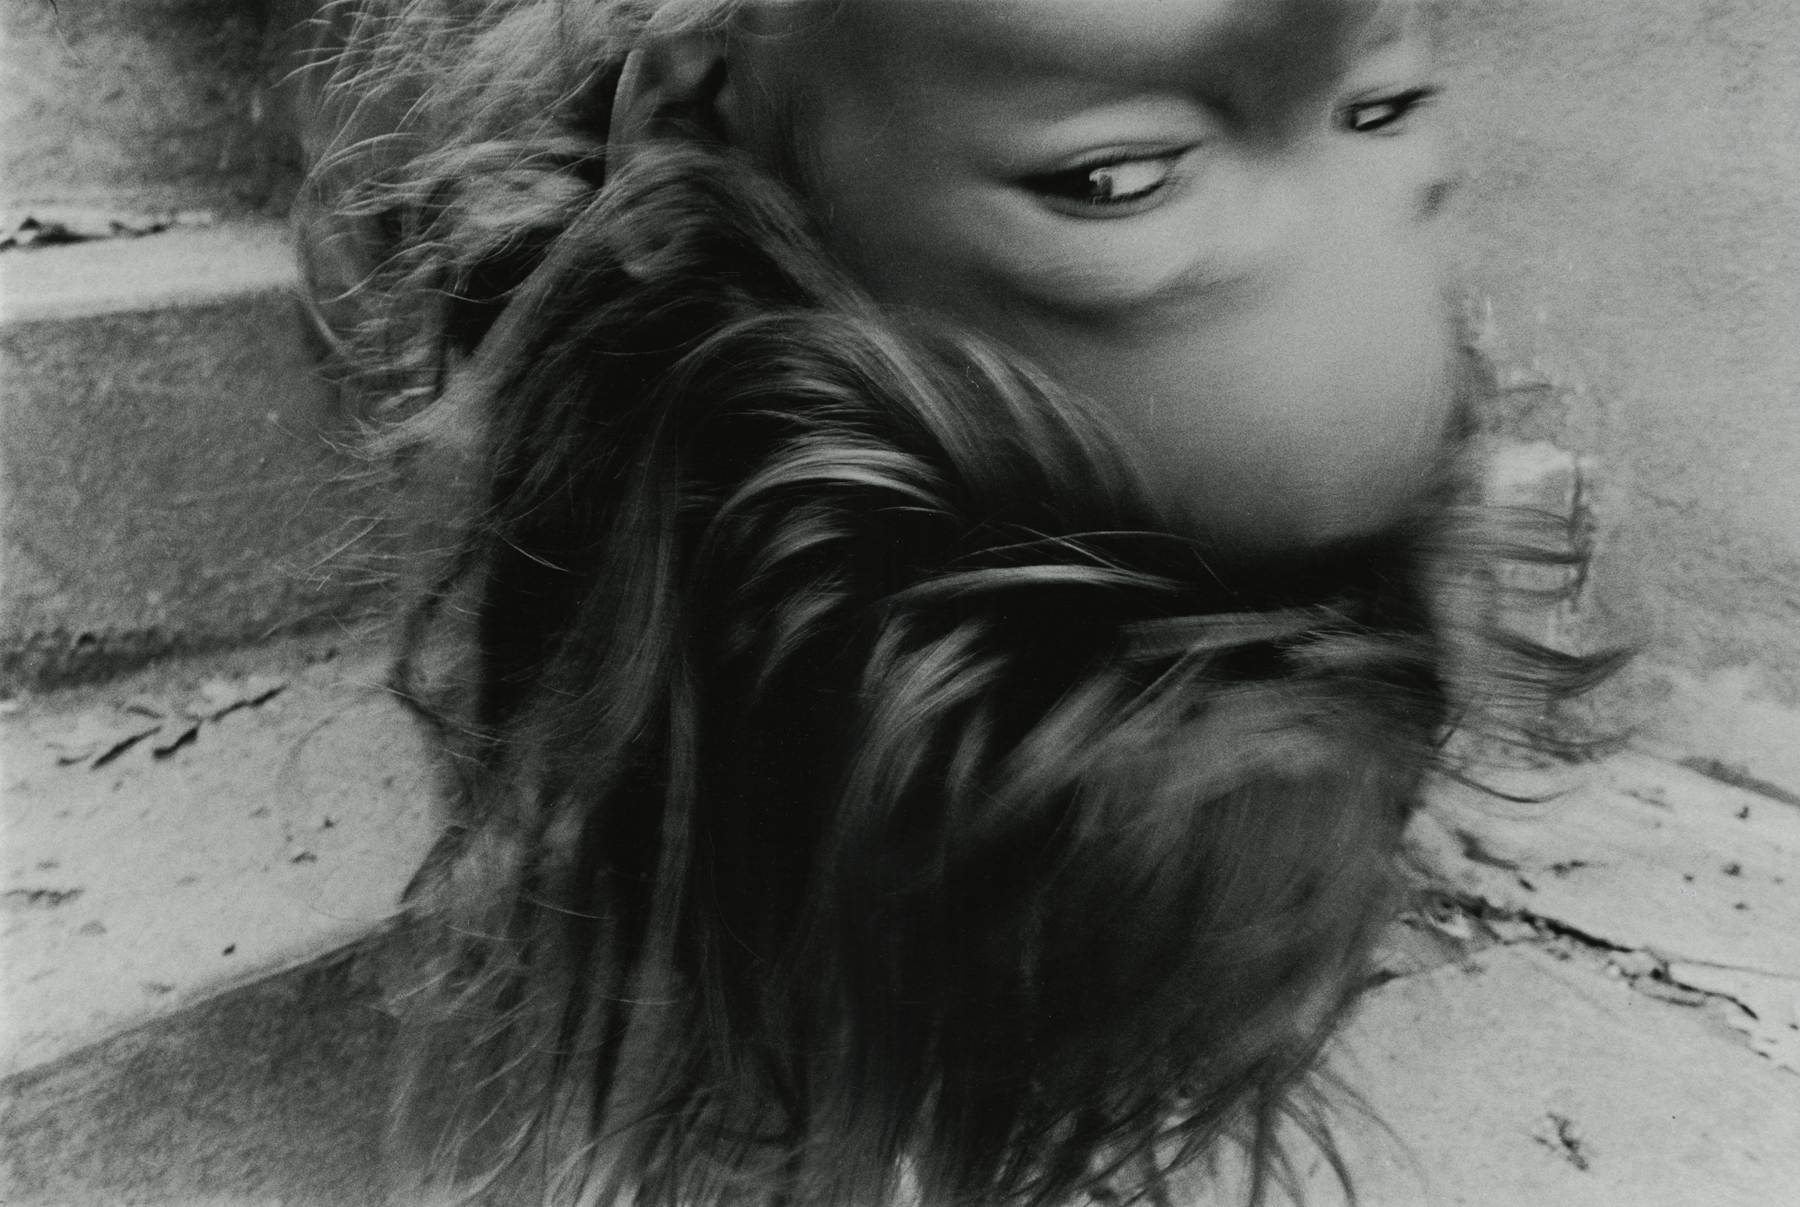 Upside Down Girl, 1974